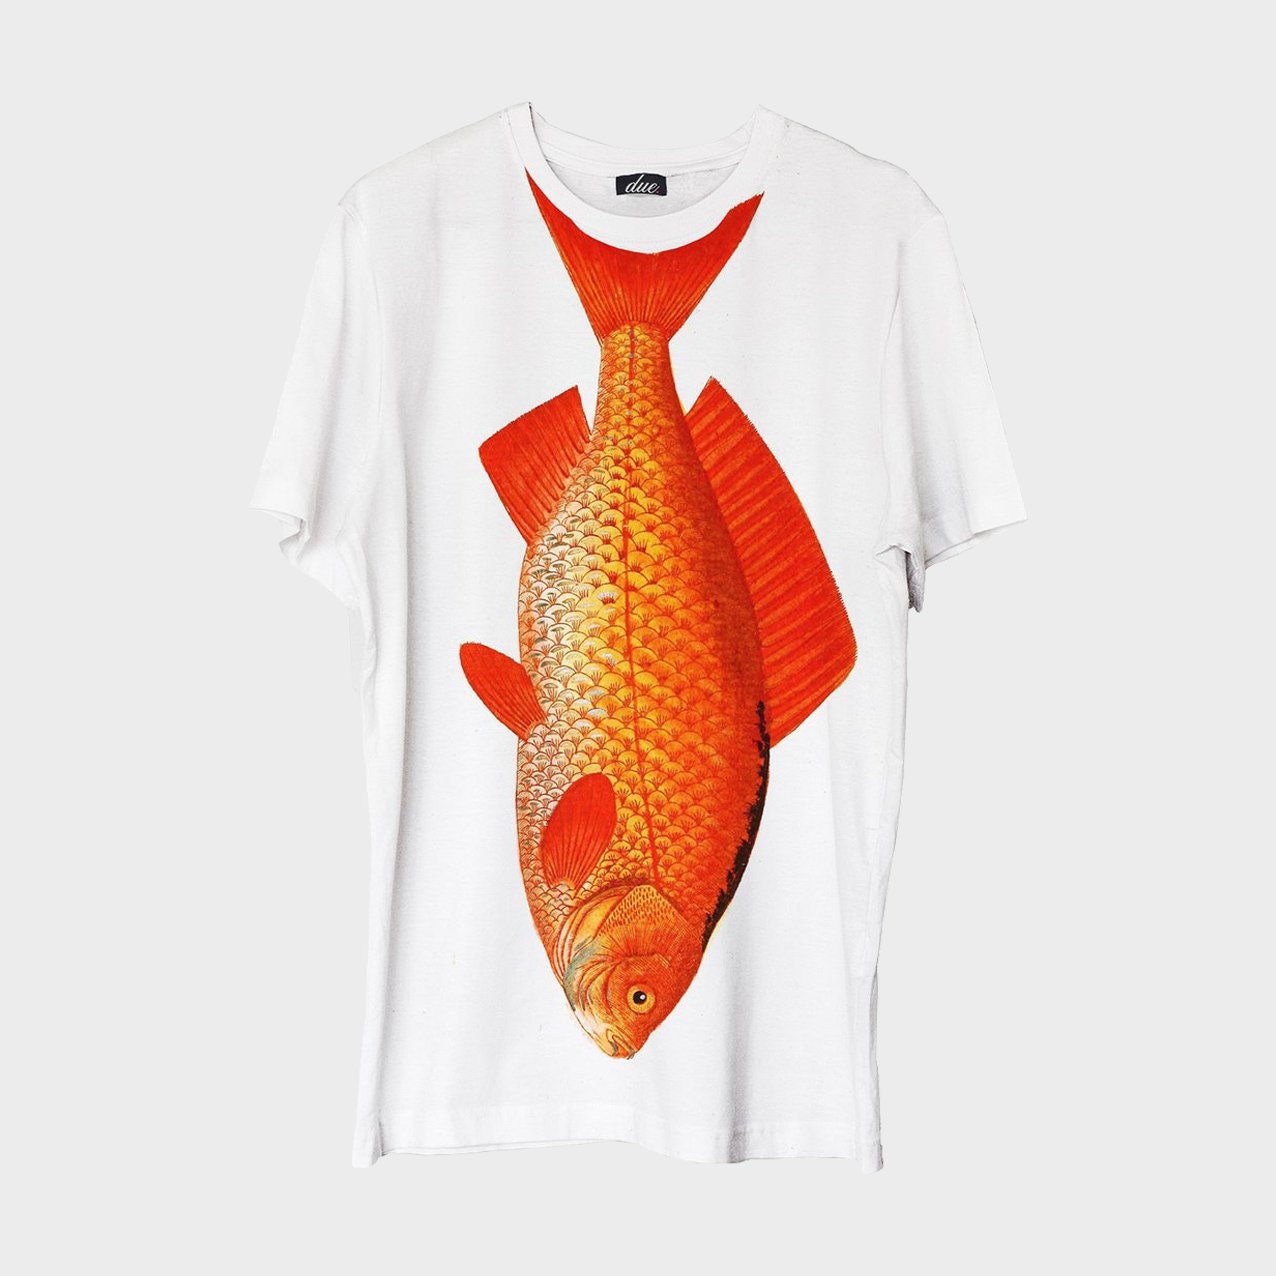 Carp - Limited Edition Handmade Front Printed Unisex T-shirt, Illustration,  Fish, Fisherman Gift, Eye-Catching Original Piece, Man Woman Tee